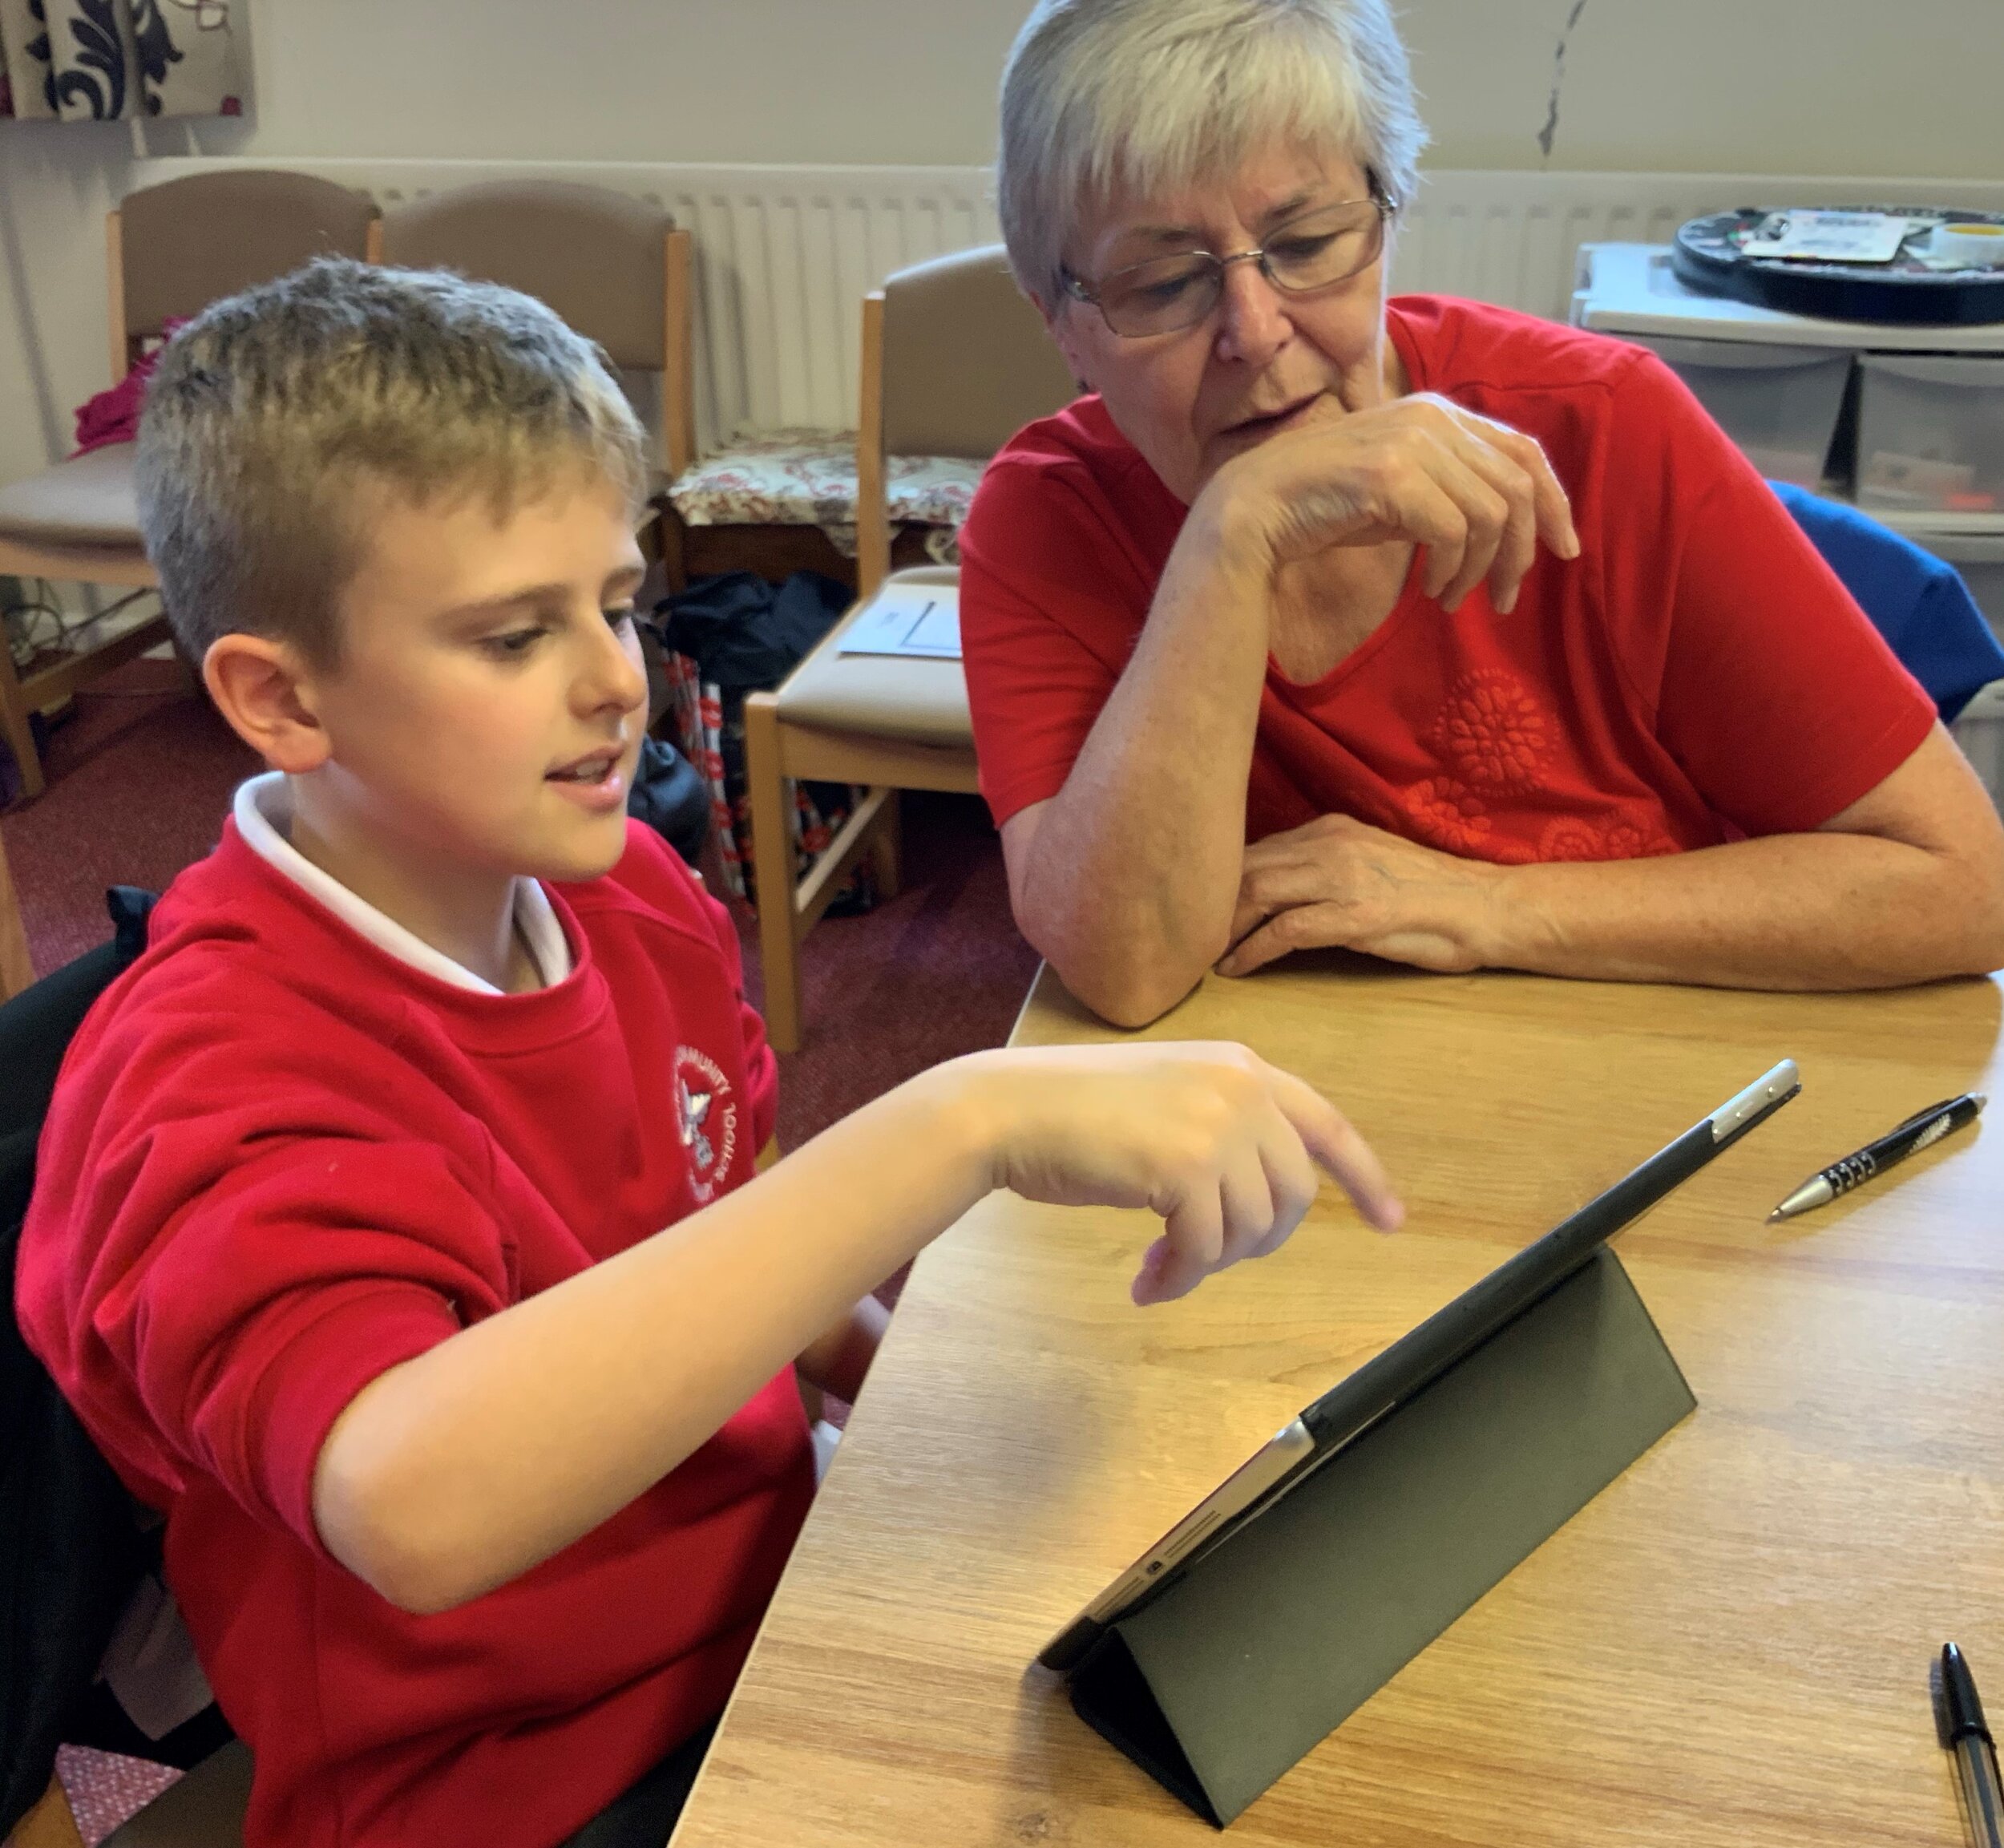 School boy showing older lady how to swipe on the ipad